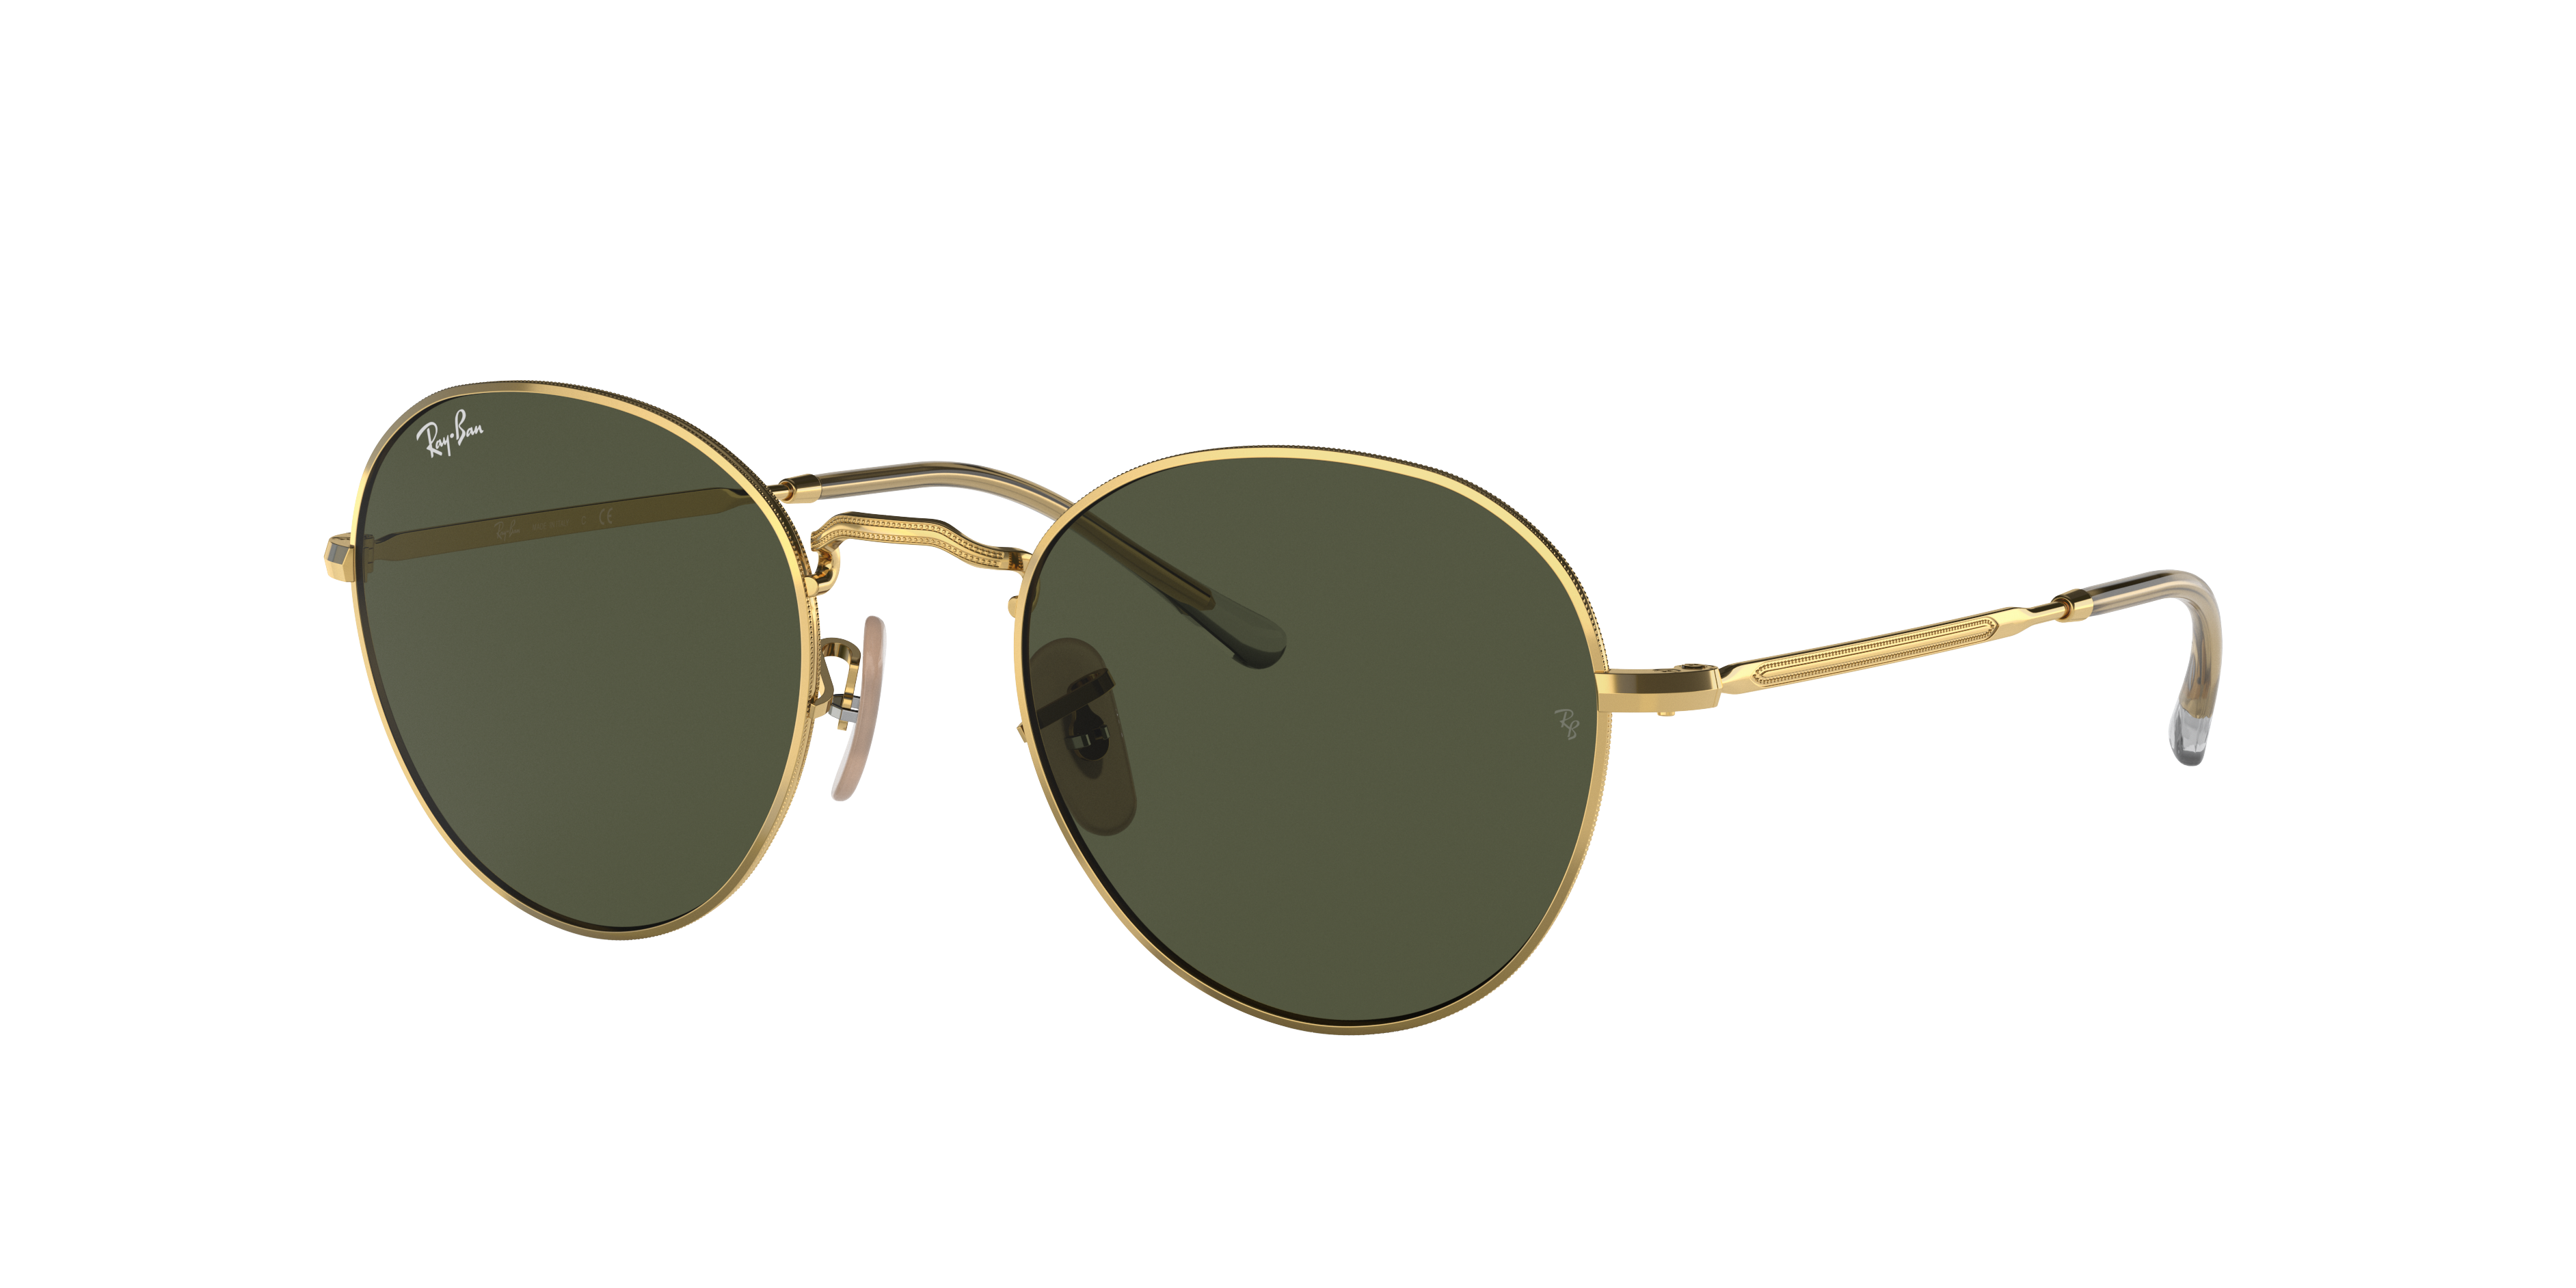 David Sunglasses in Gold and Green | Ray-Ban®